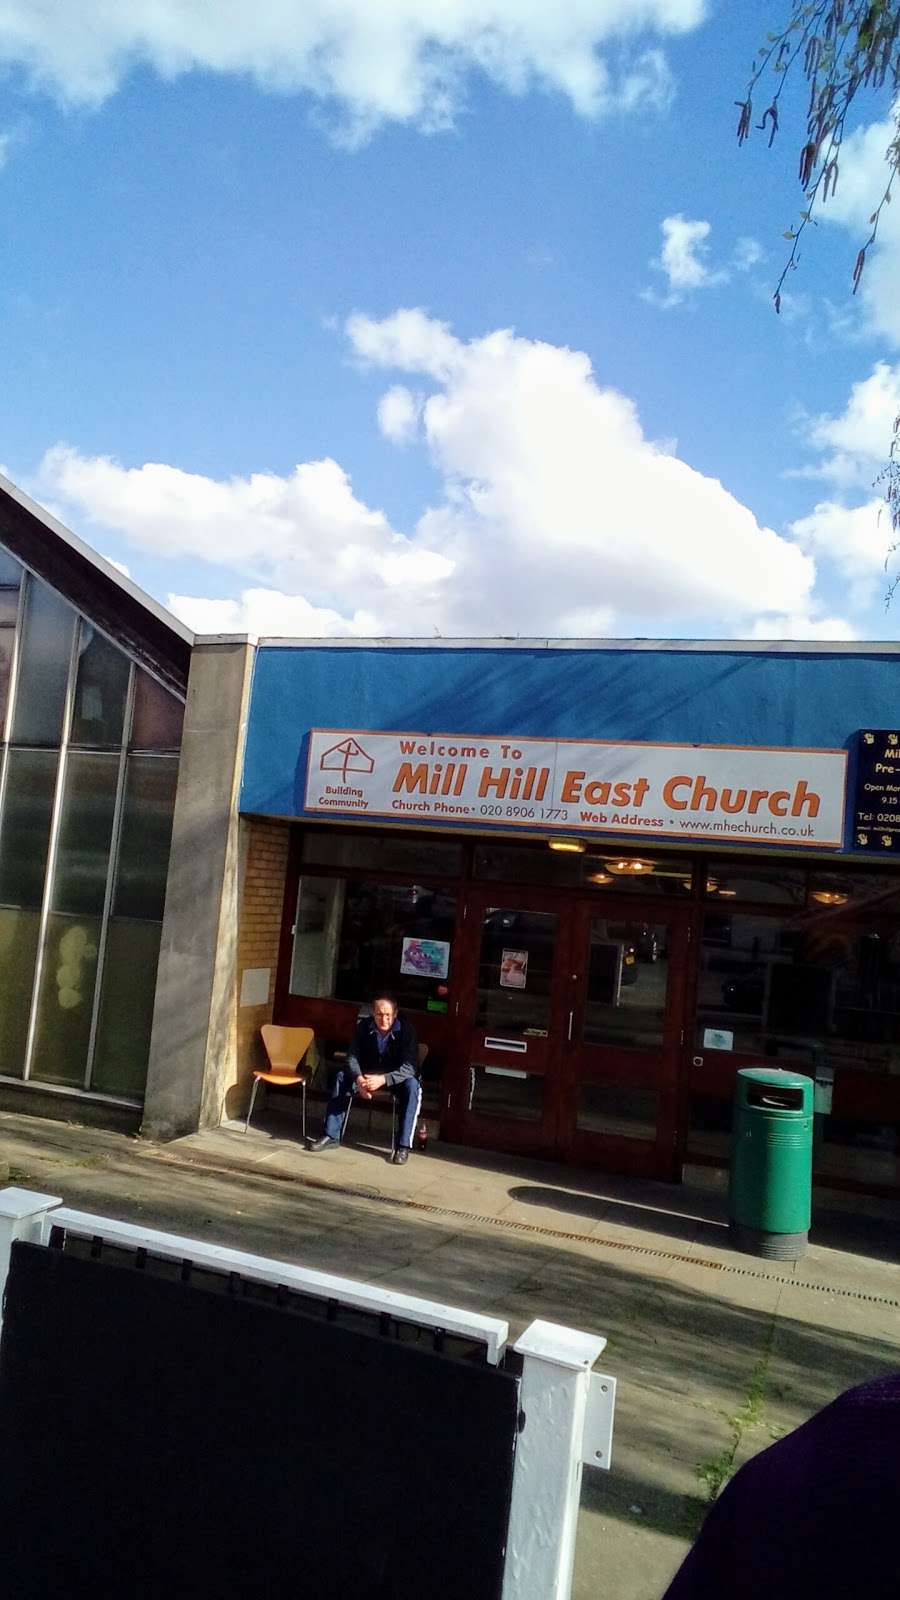 Mill Hill East Church | Salcombe Gardens, London NW7 2NT, UK | Phone: 020 8906 1773